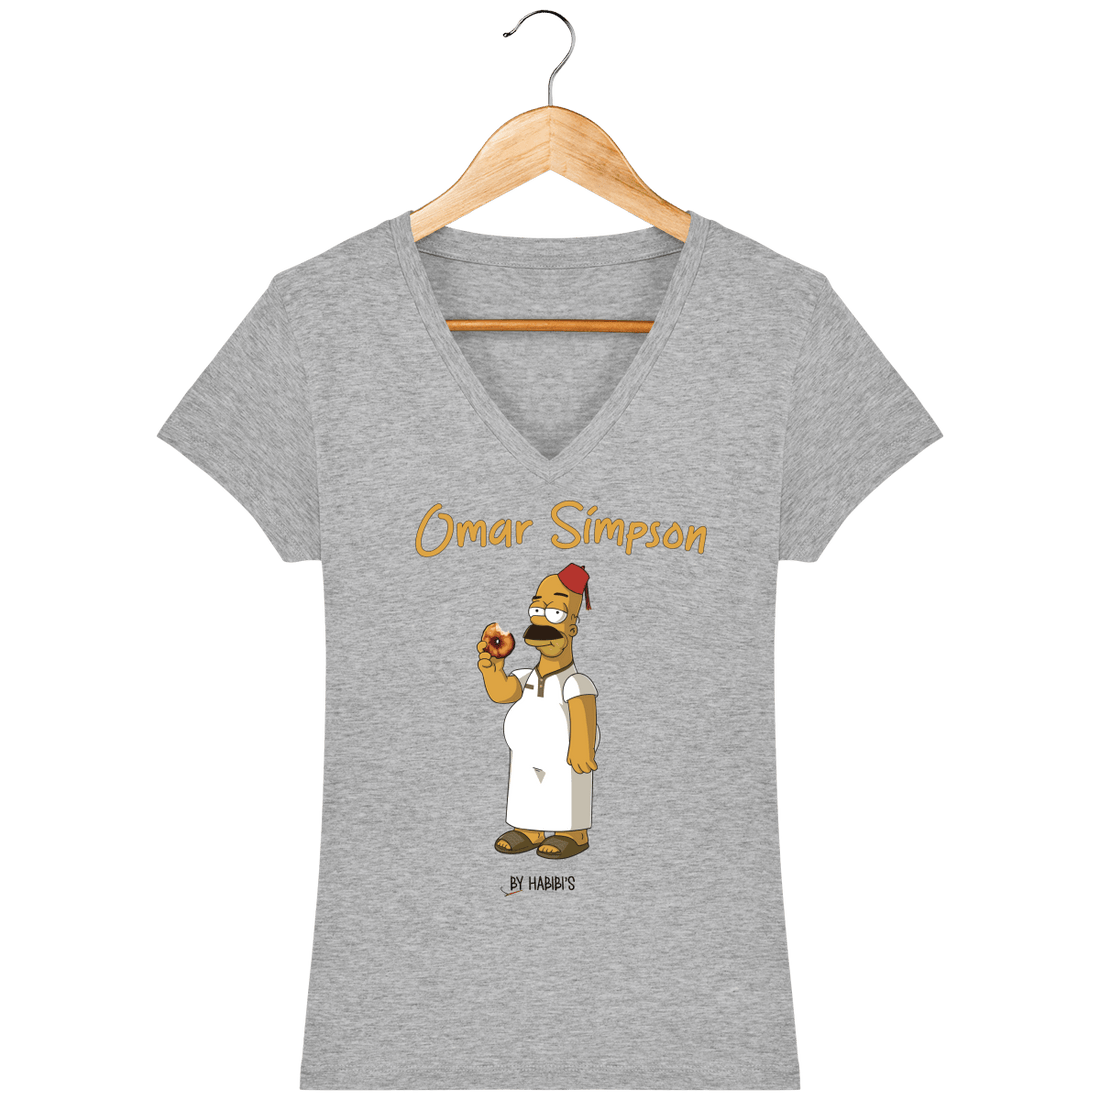 Femme>Tee-shirts - T-Shirt Femme Col V <br> Omar Simpson